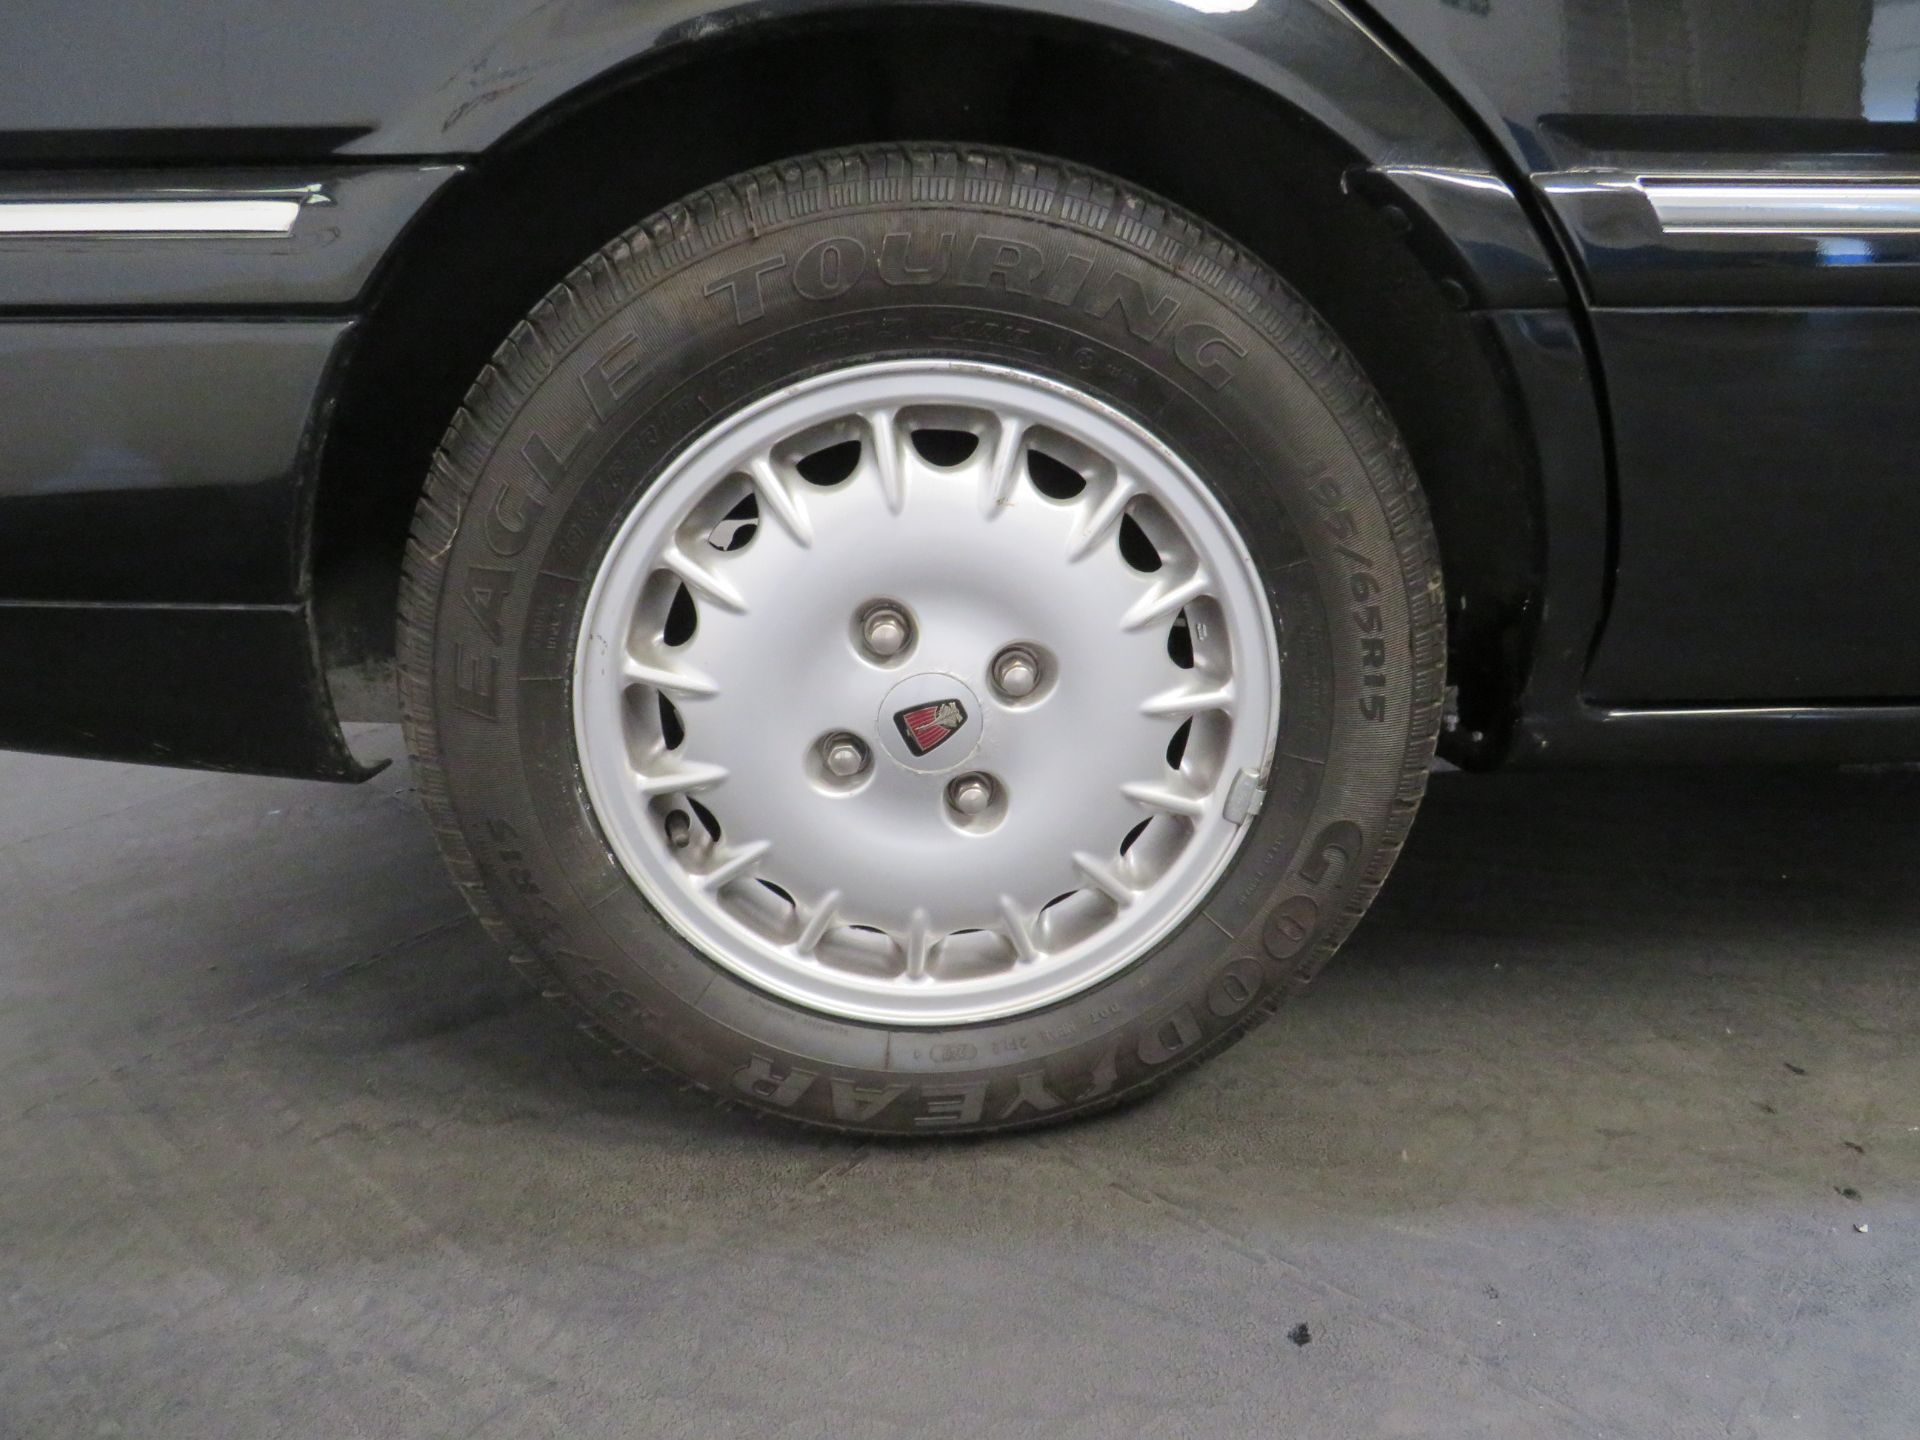 1997 Rover 825 SI Limousine Auto - 2496cc - Image 15 of 16